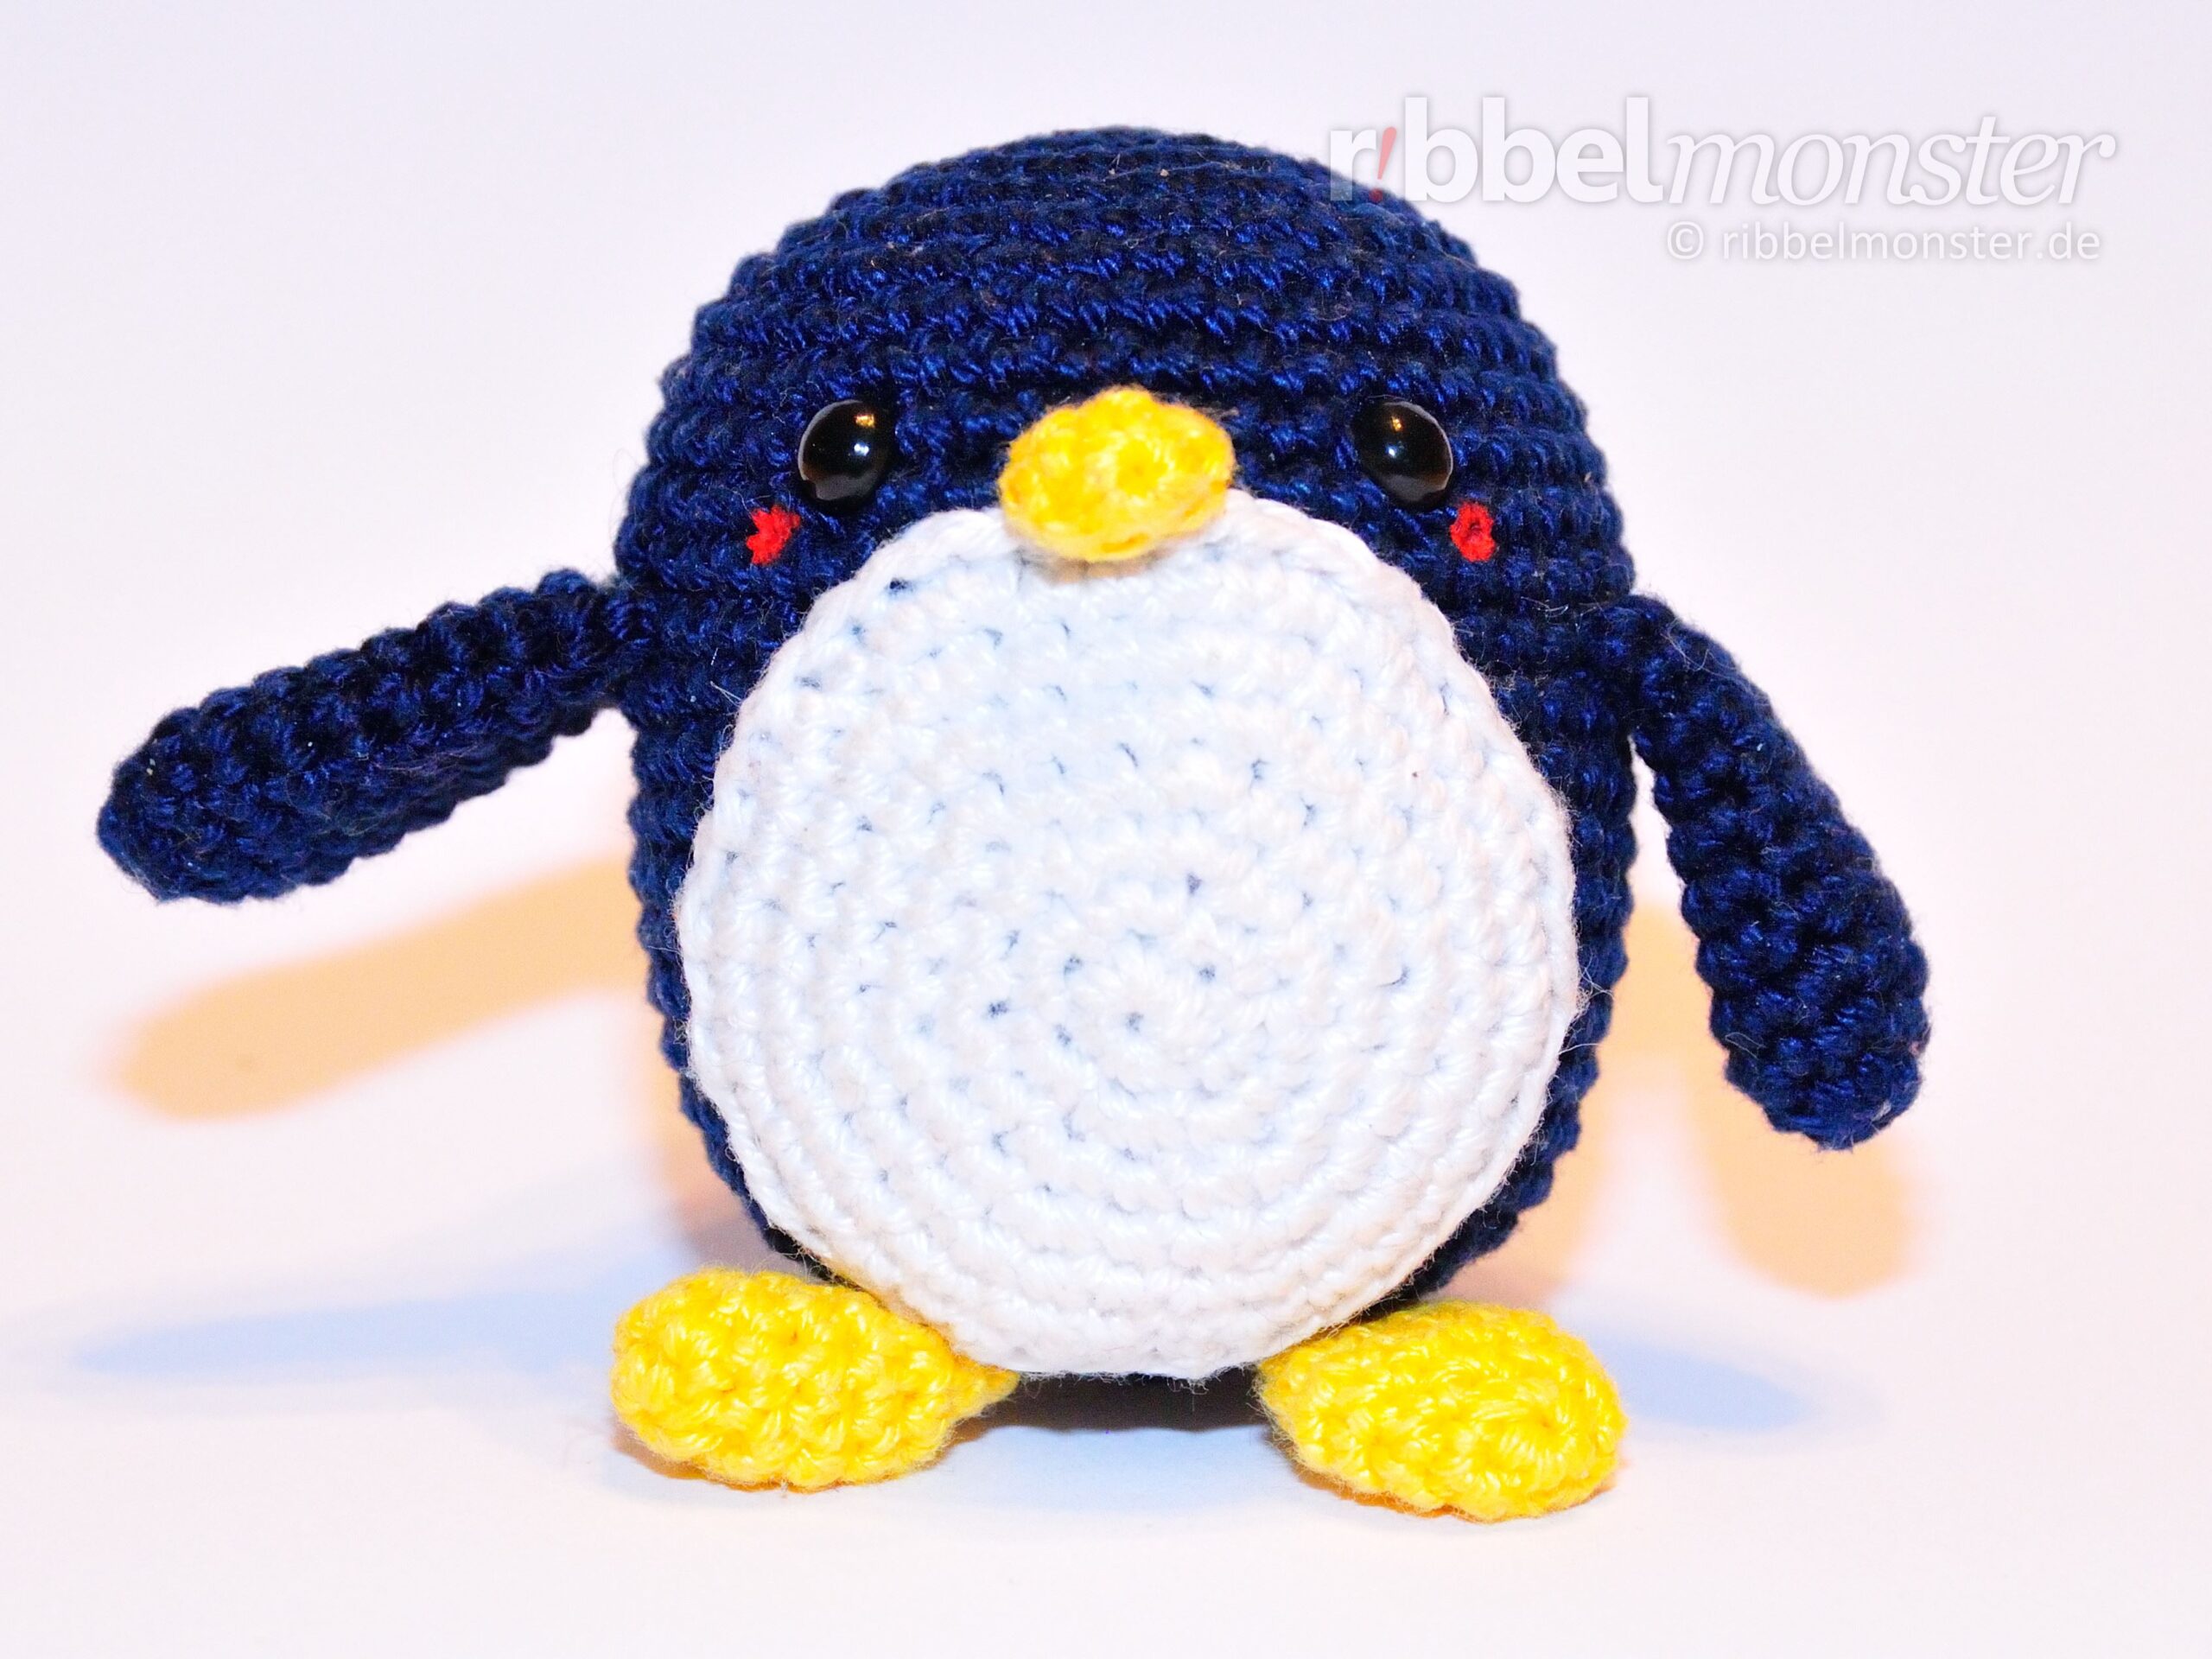 Amigurumi - mittleren Pinguin häkeln - Chubby - einfache Anleitung